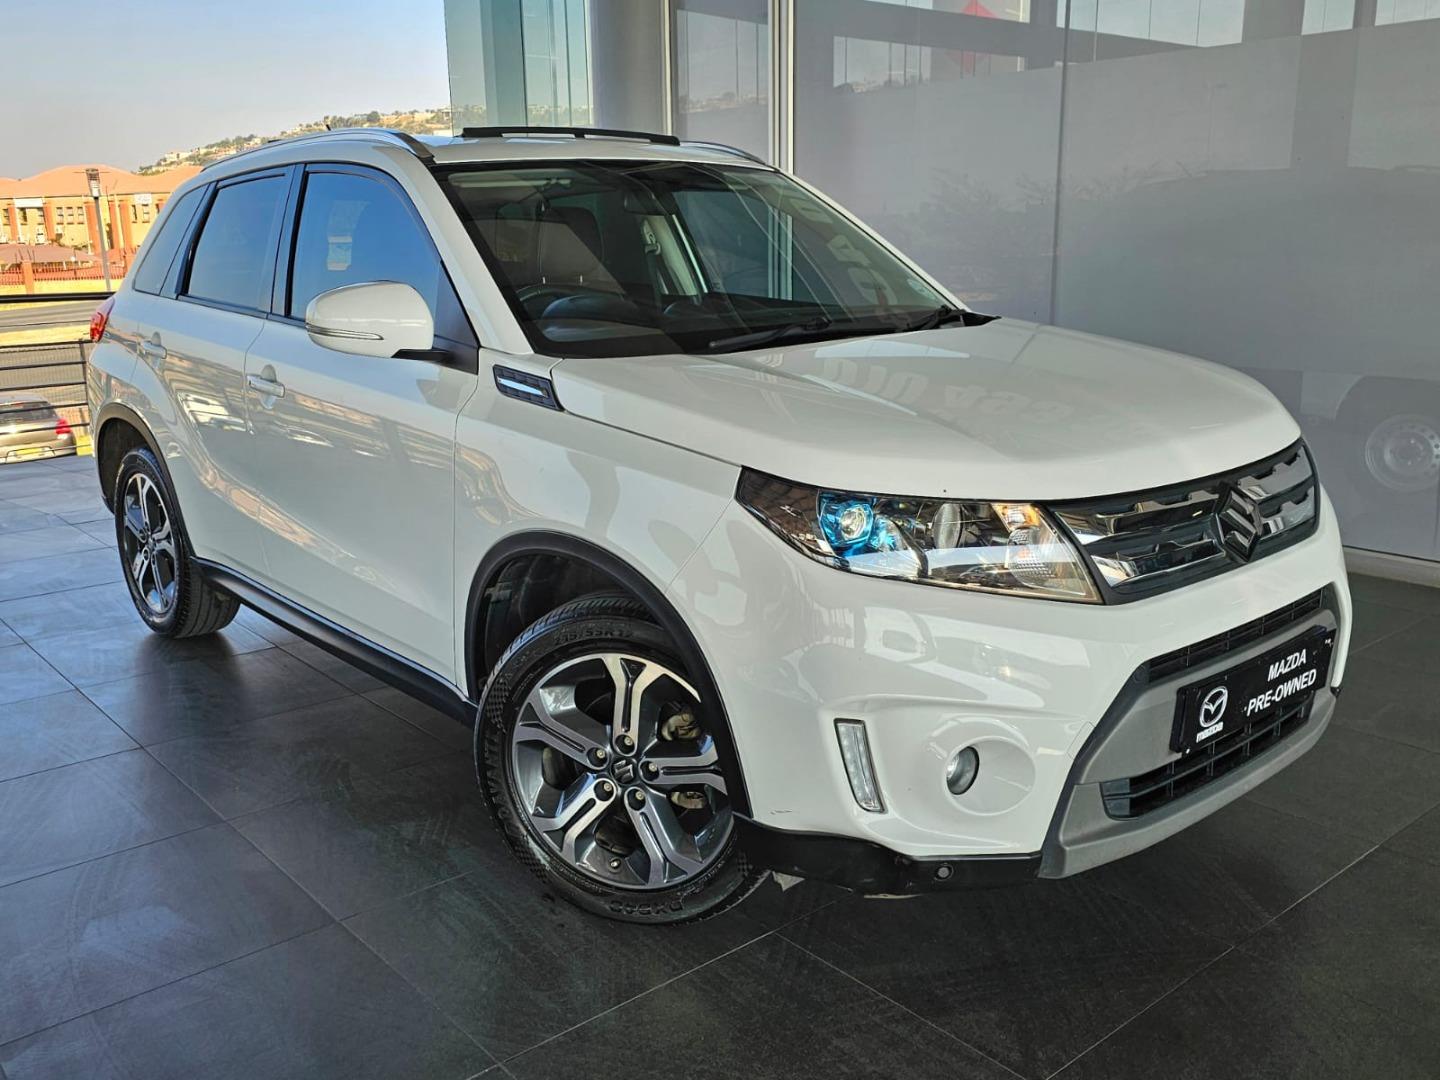 2018 Suzuki Vitara  for sale - UC4498